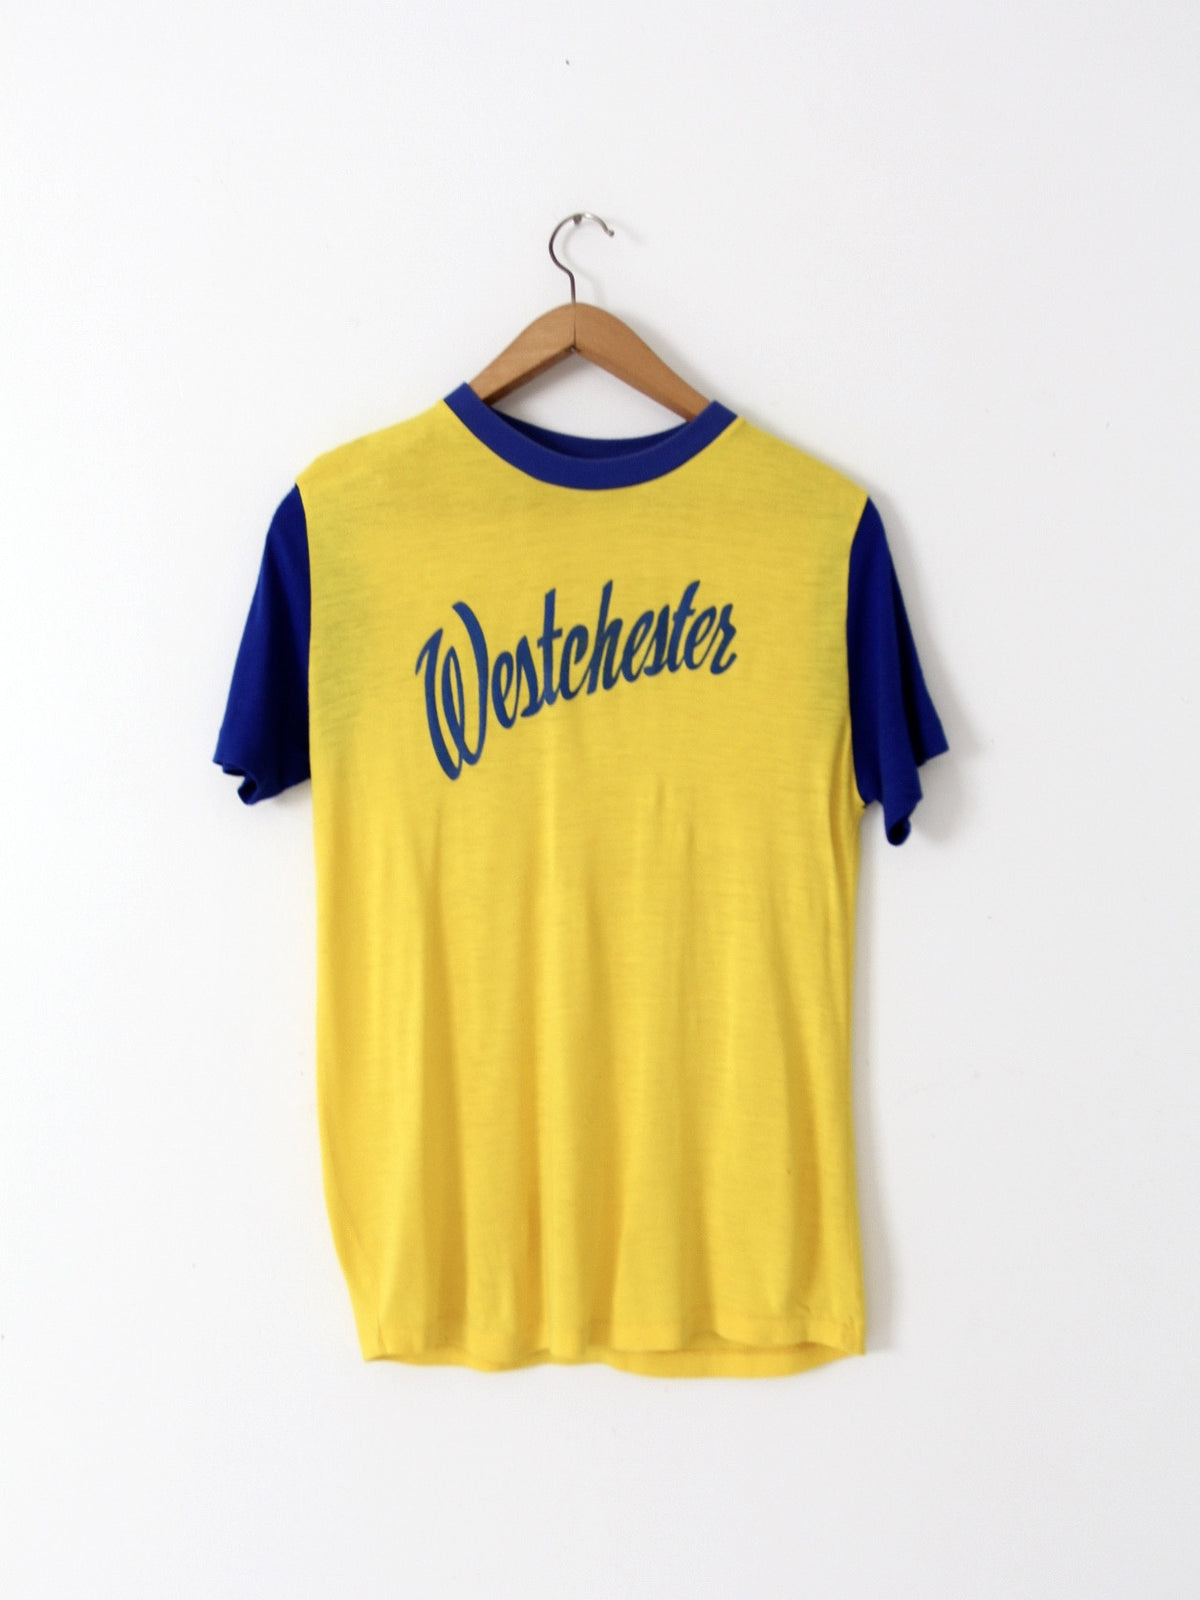 vintage Westchester t-shirt graphic tee